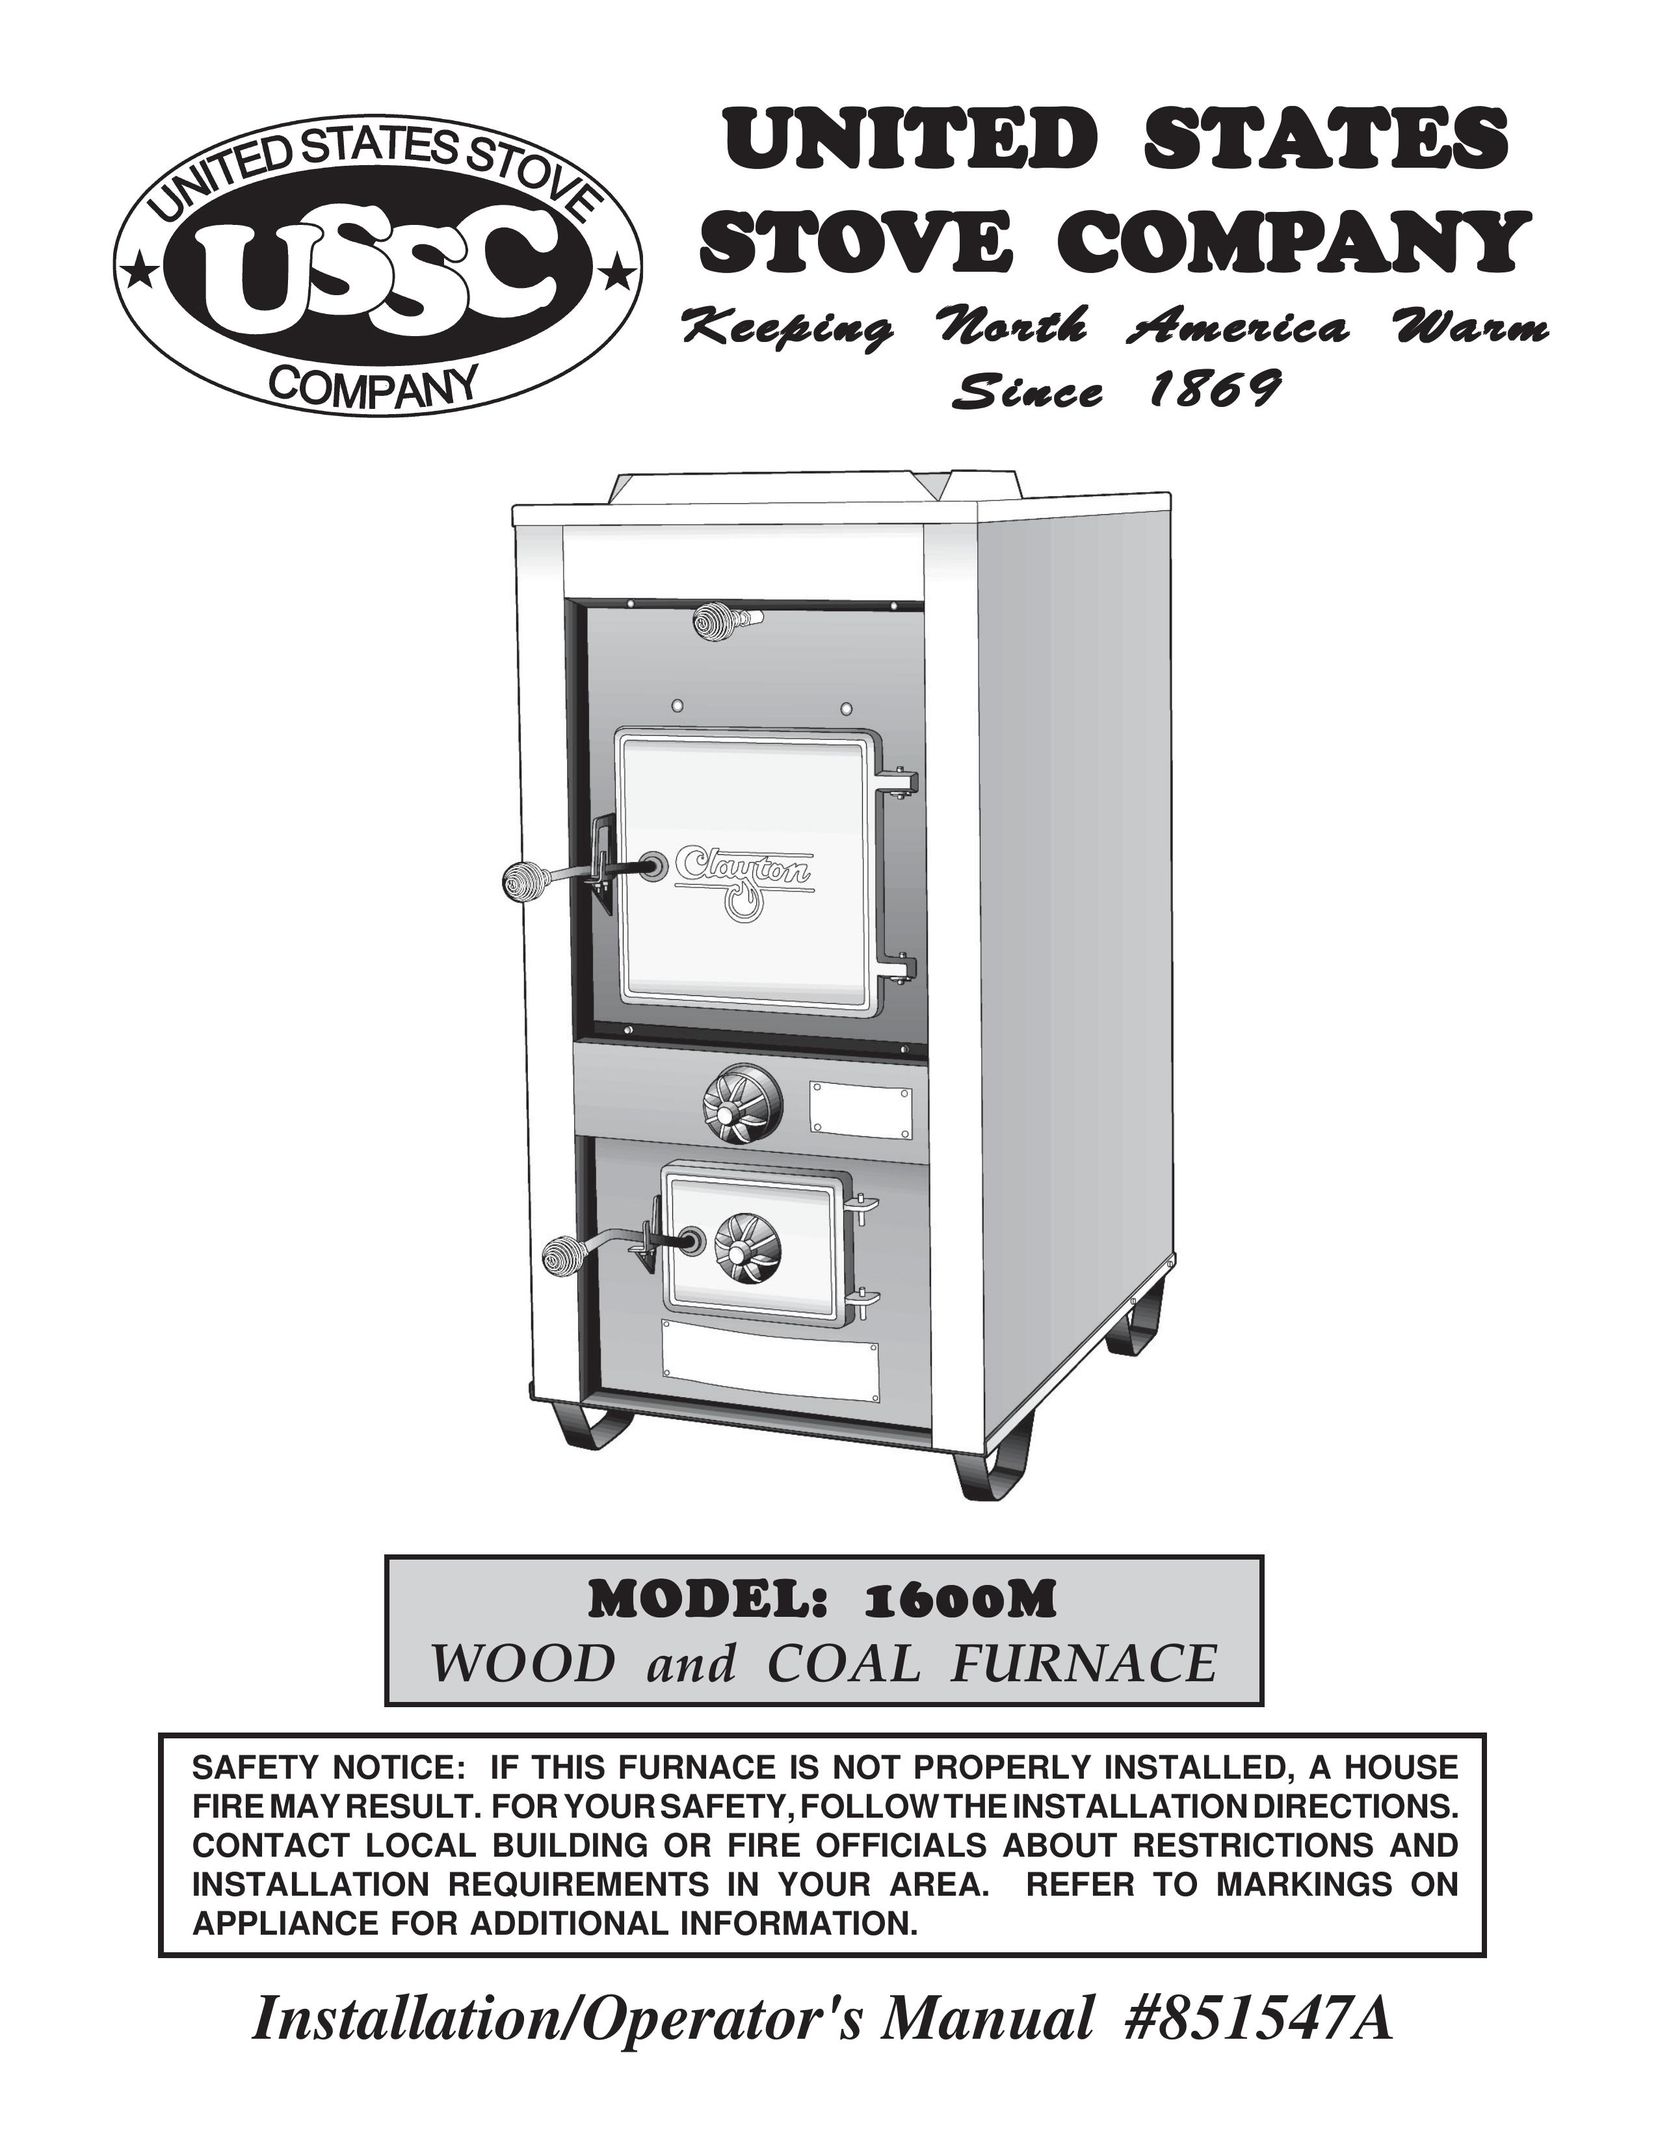 United States Stove 1600M Furnace User Manual